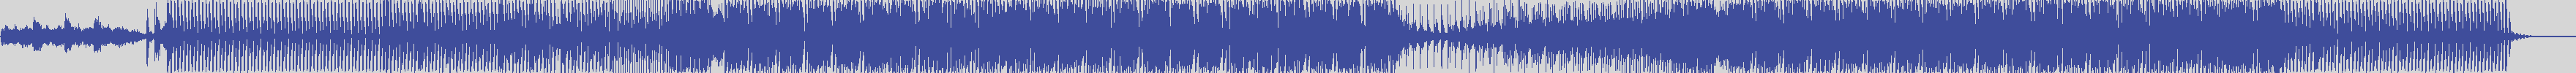 atomic_recordings [AR013] Antonio Rossini - Back To The Old School [Original Mix] audio wave form